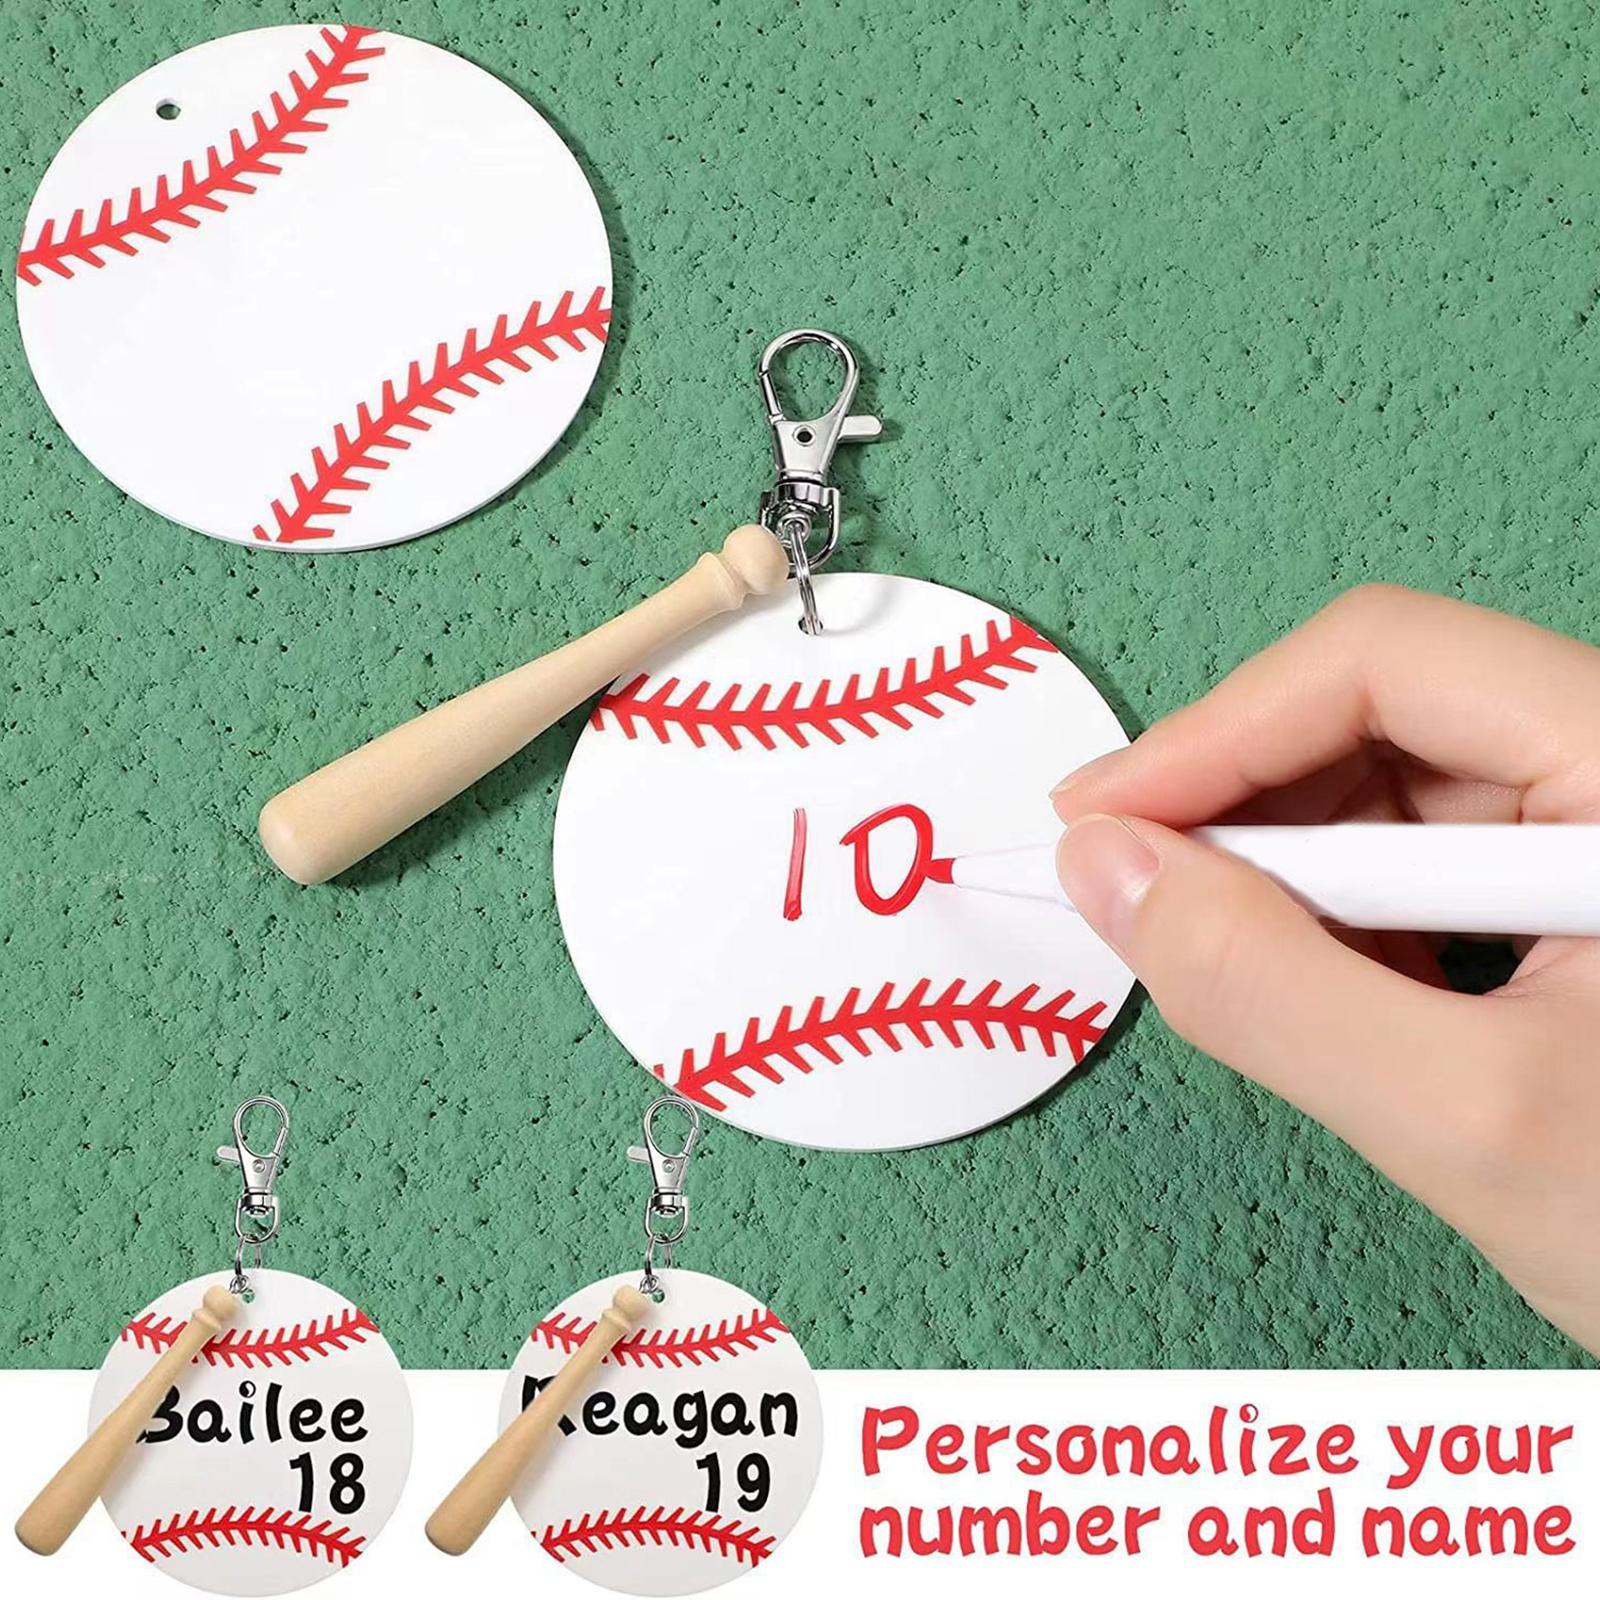 12 Sets Baseball Acrylic Keychain Blank Kit, Acrylic Baseball Blank, Swivel Snap Hooks Baseball Keychain, Wooden Bats